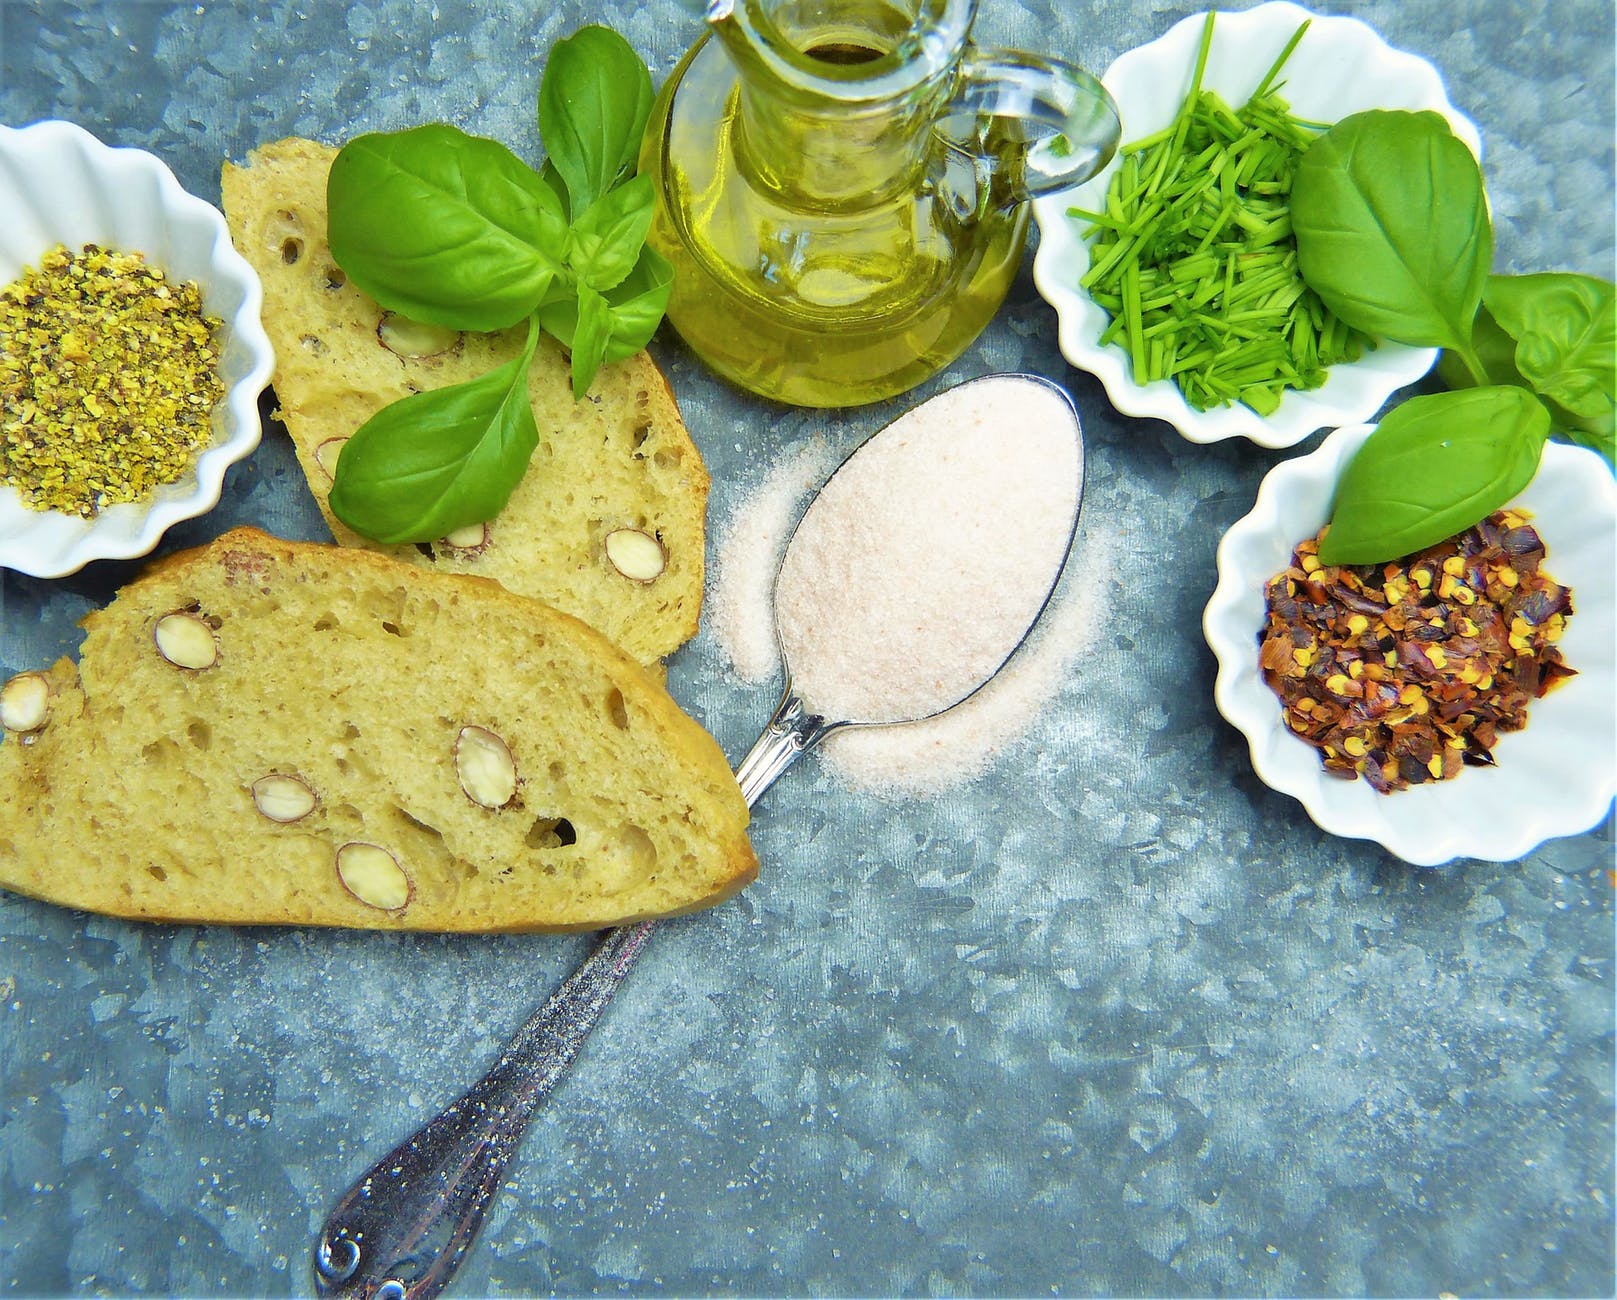 Alimentación natural, solución para personas con intolerancia al gluten: IMSS